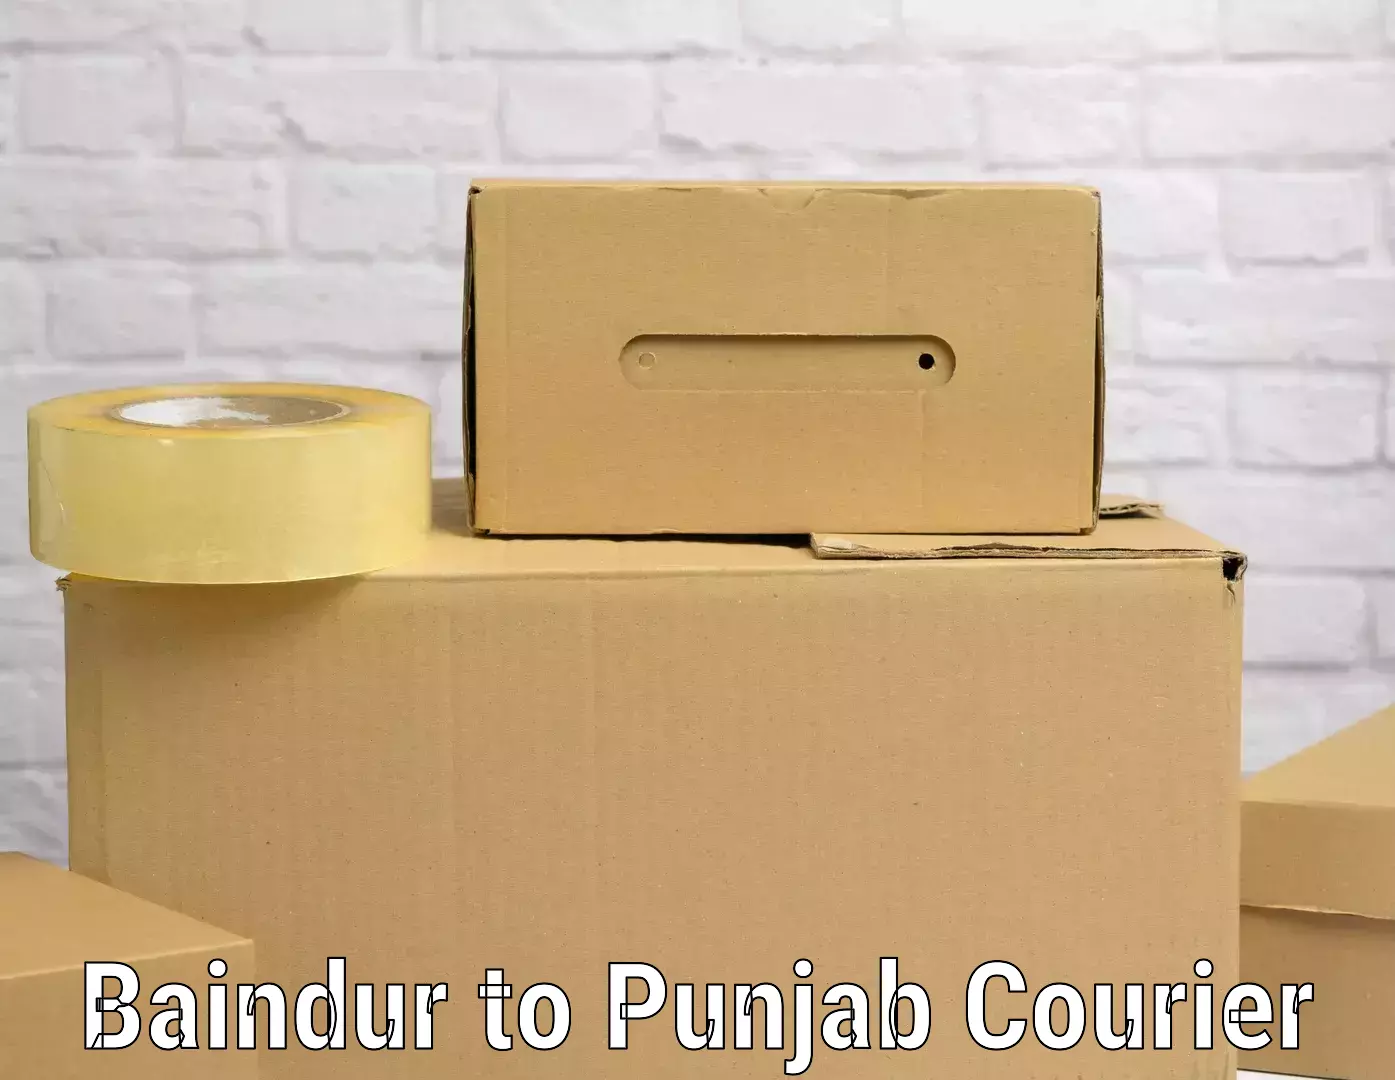 Professional baggage delivery Baindur to Punjab